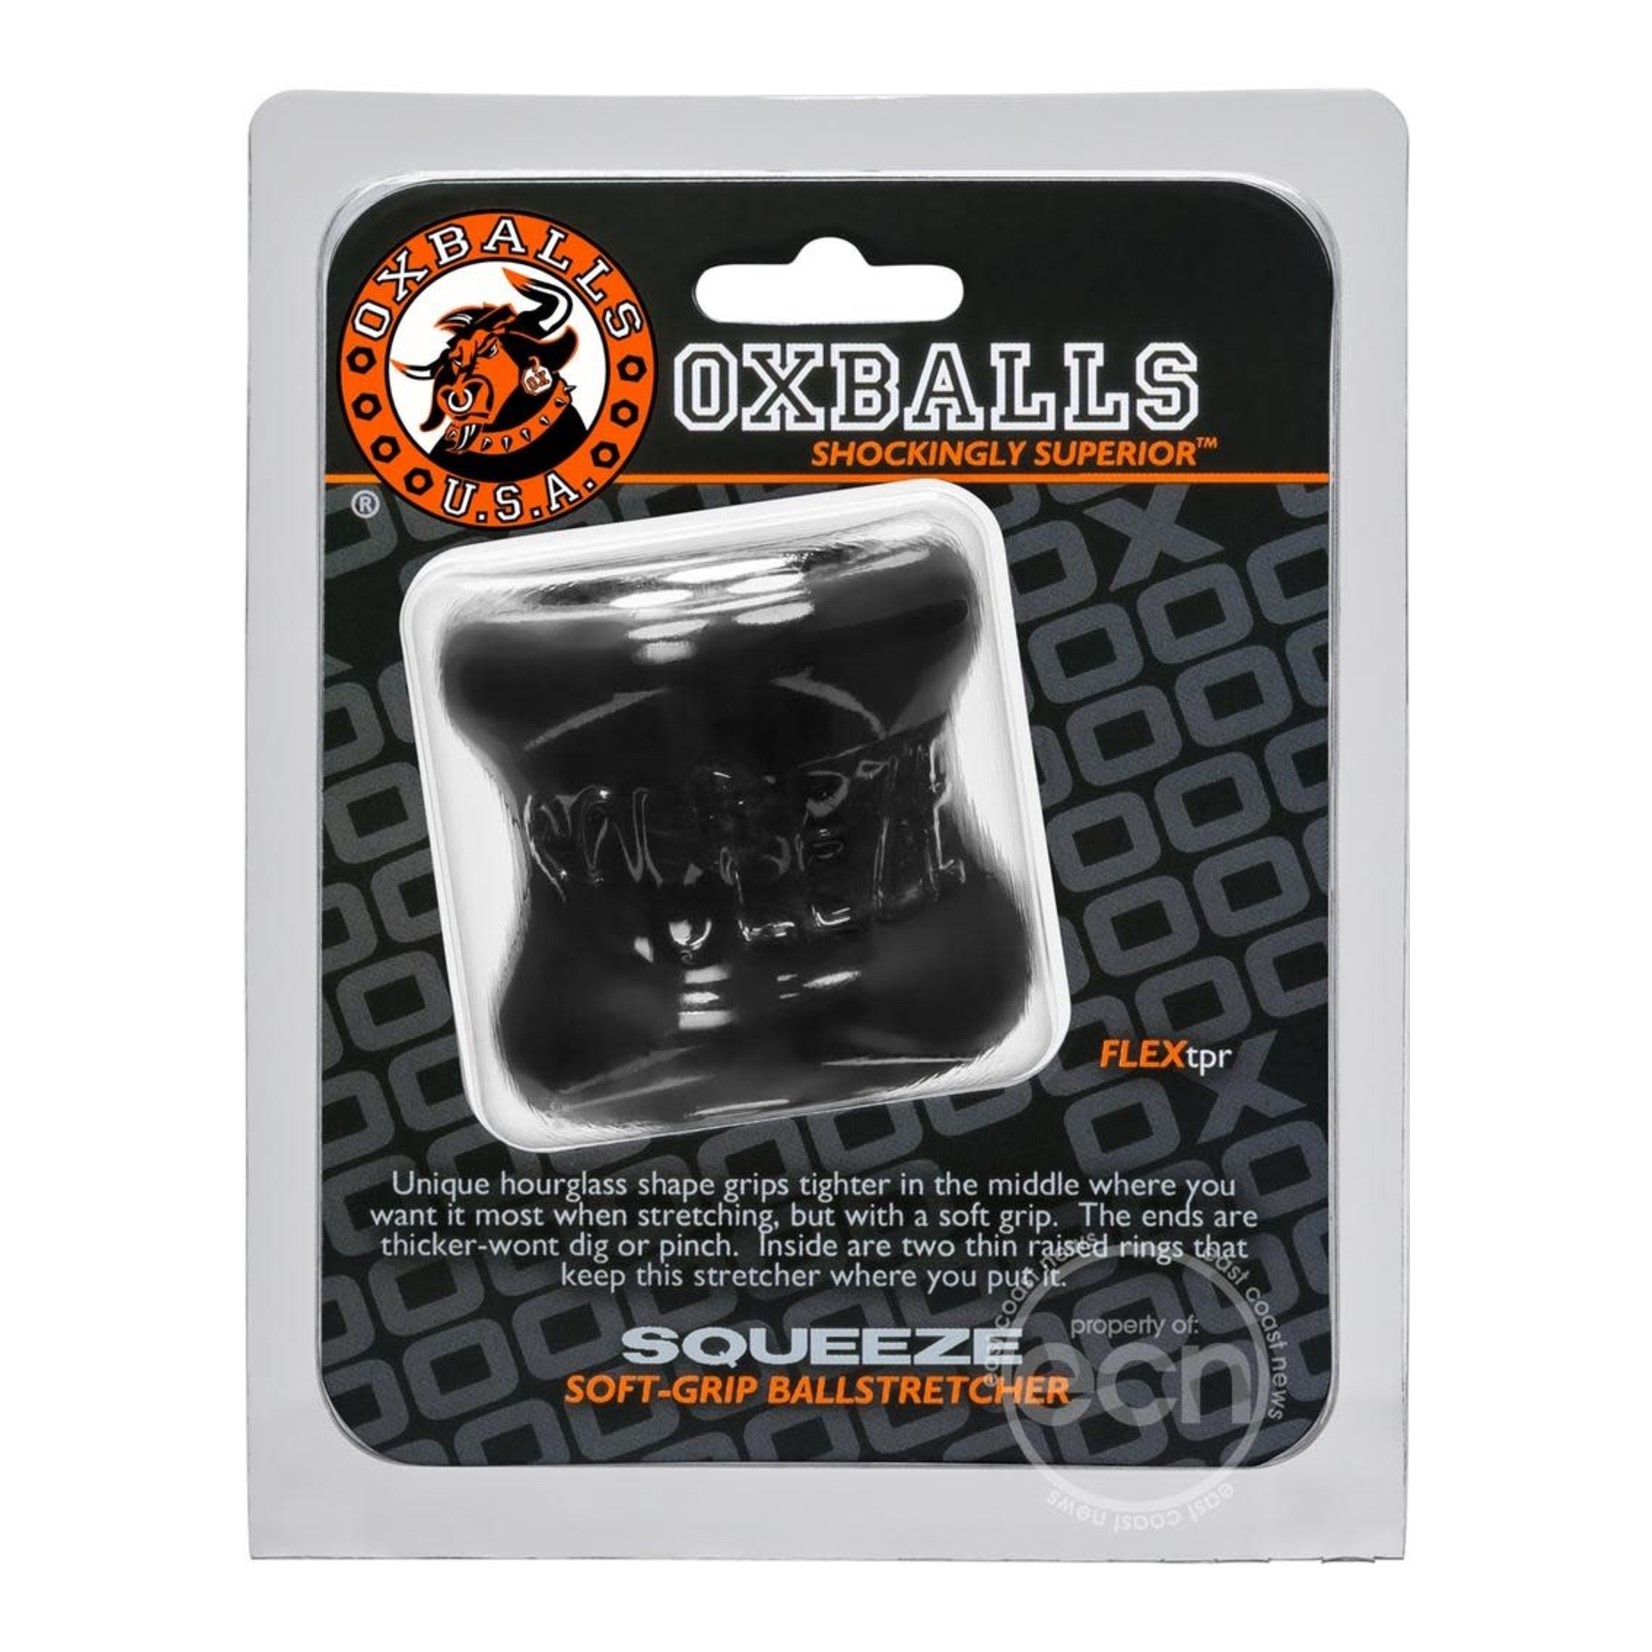 Oxballs Squeeze Soft Grip Ball Stretcher - Black